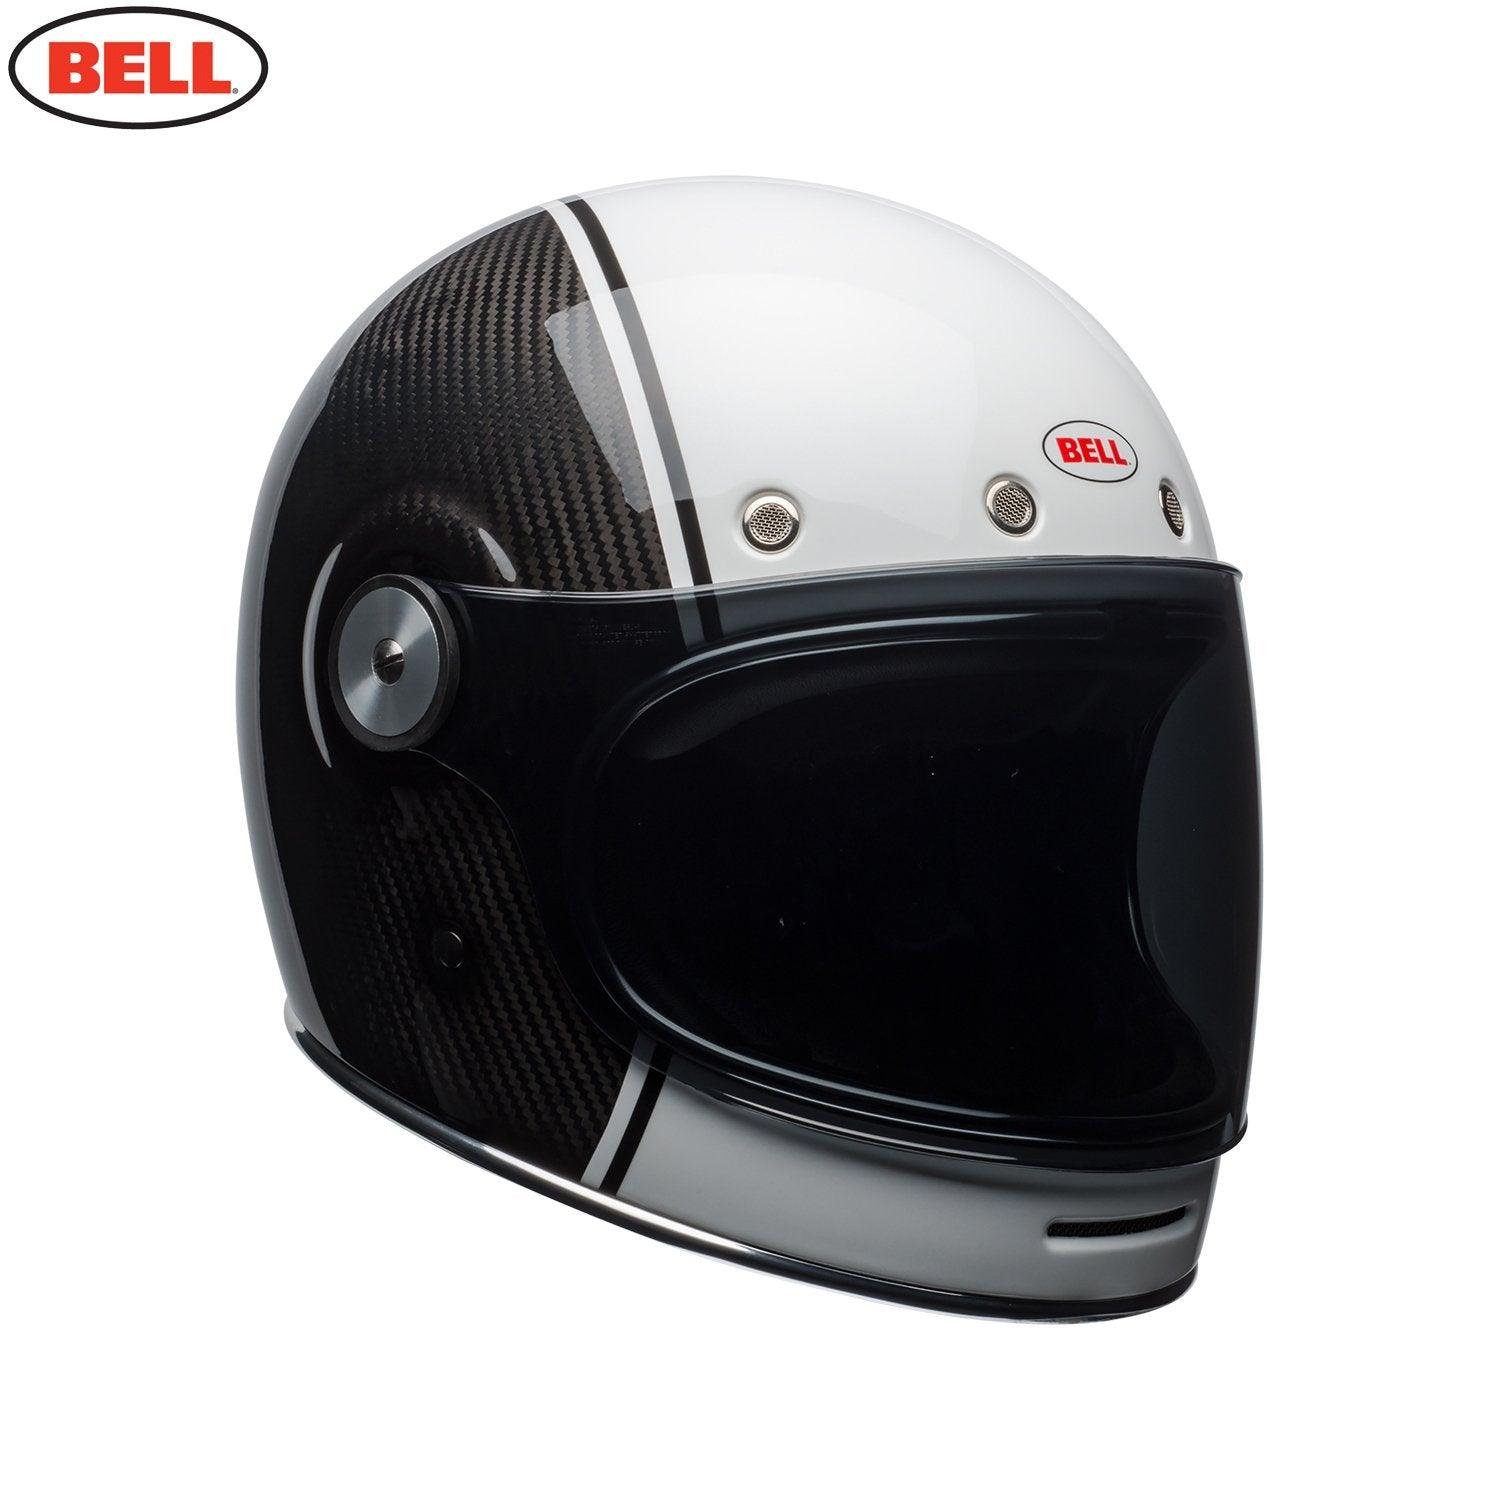 Bullitt - Newmarket Motorcycle Company 